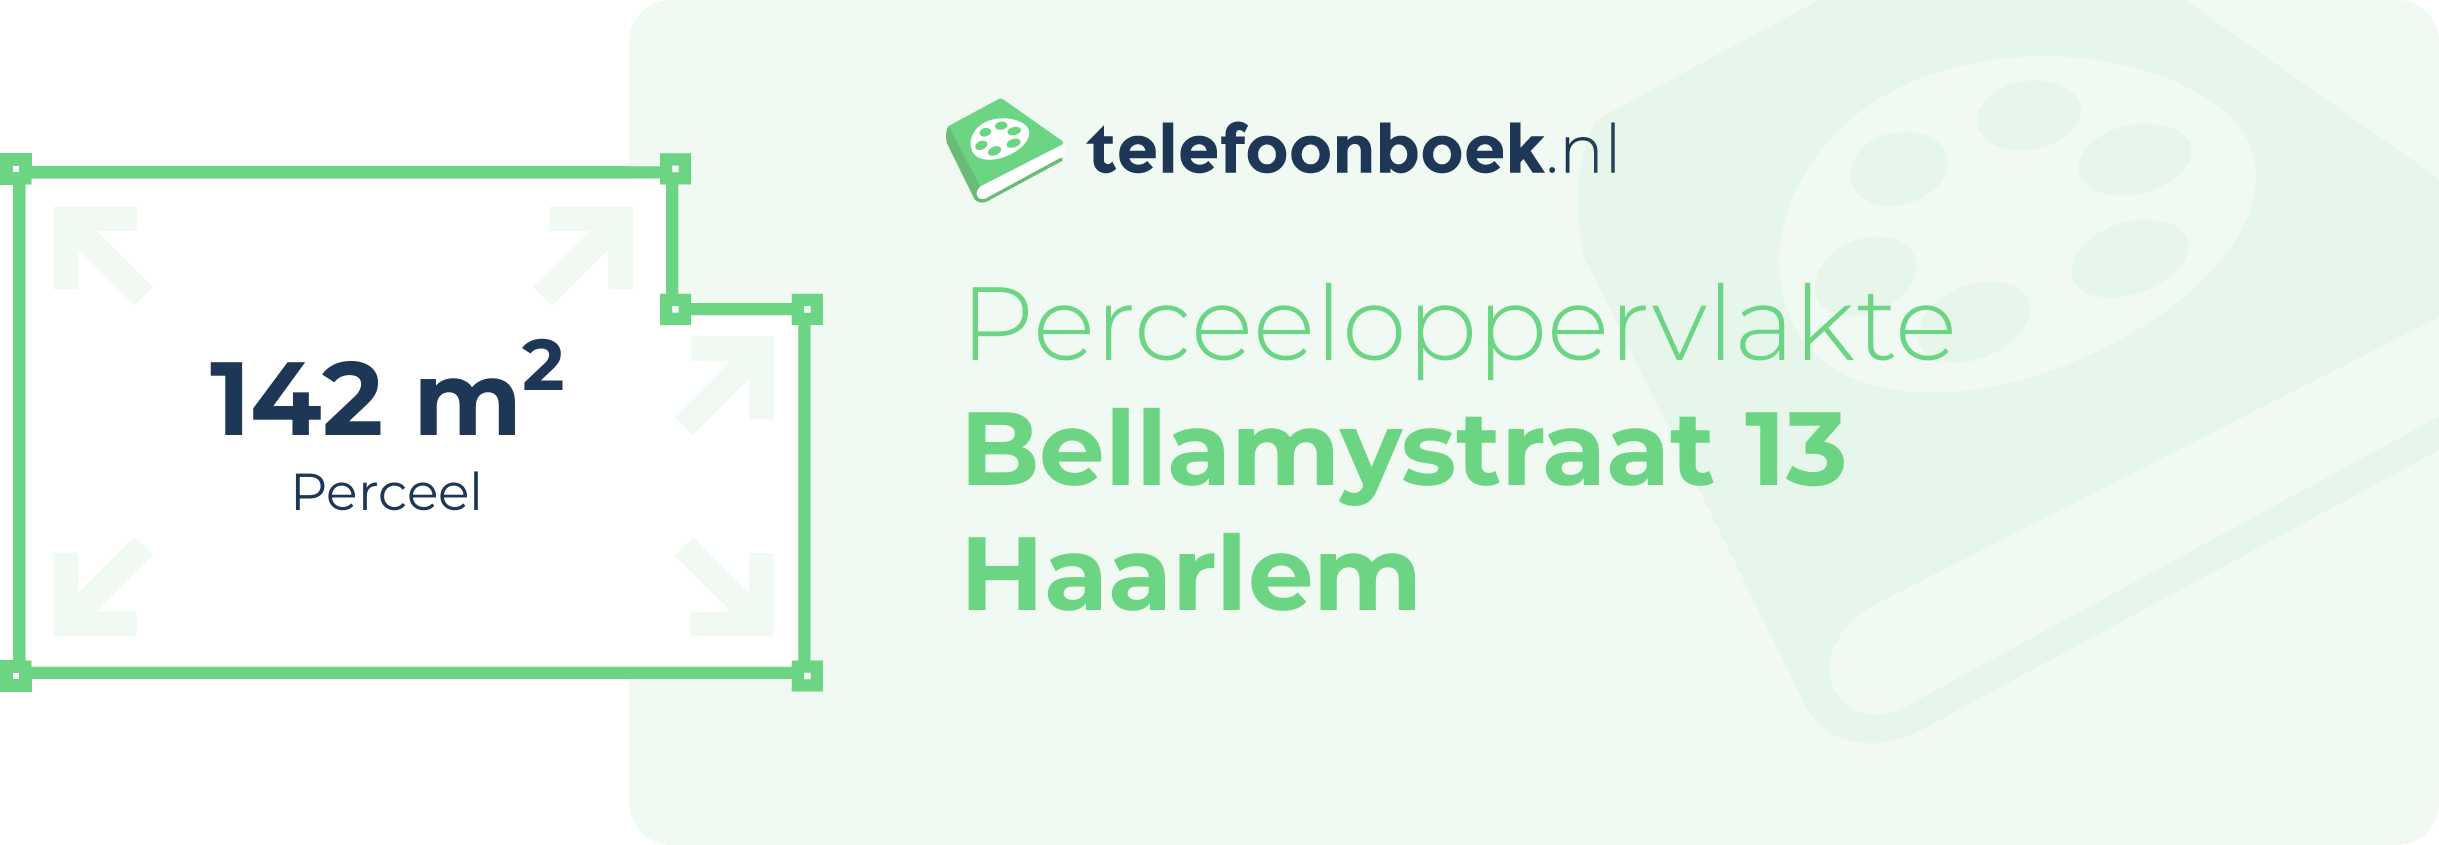 Perceeloppervlakte Bellamystraat 13 Haarlem